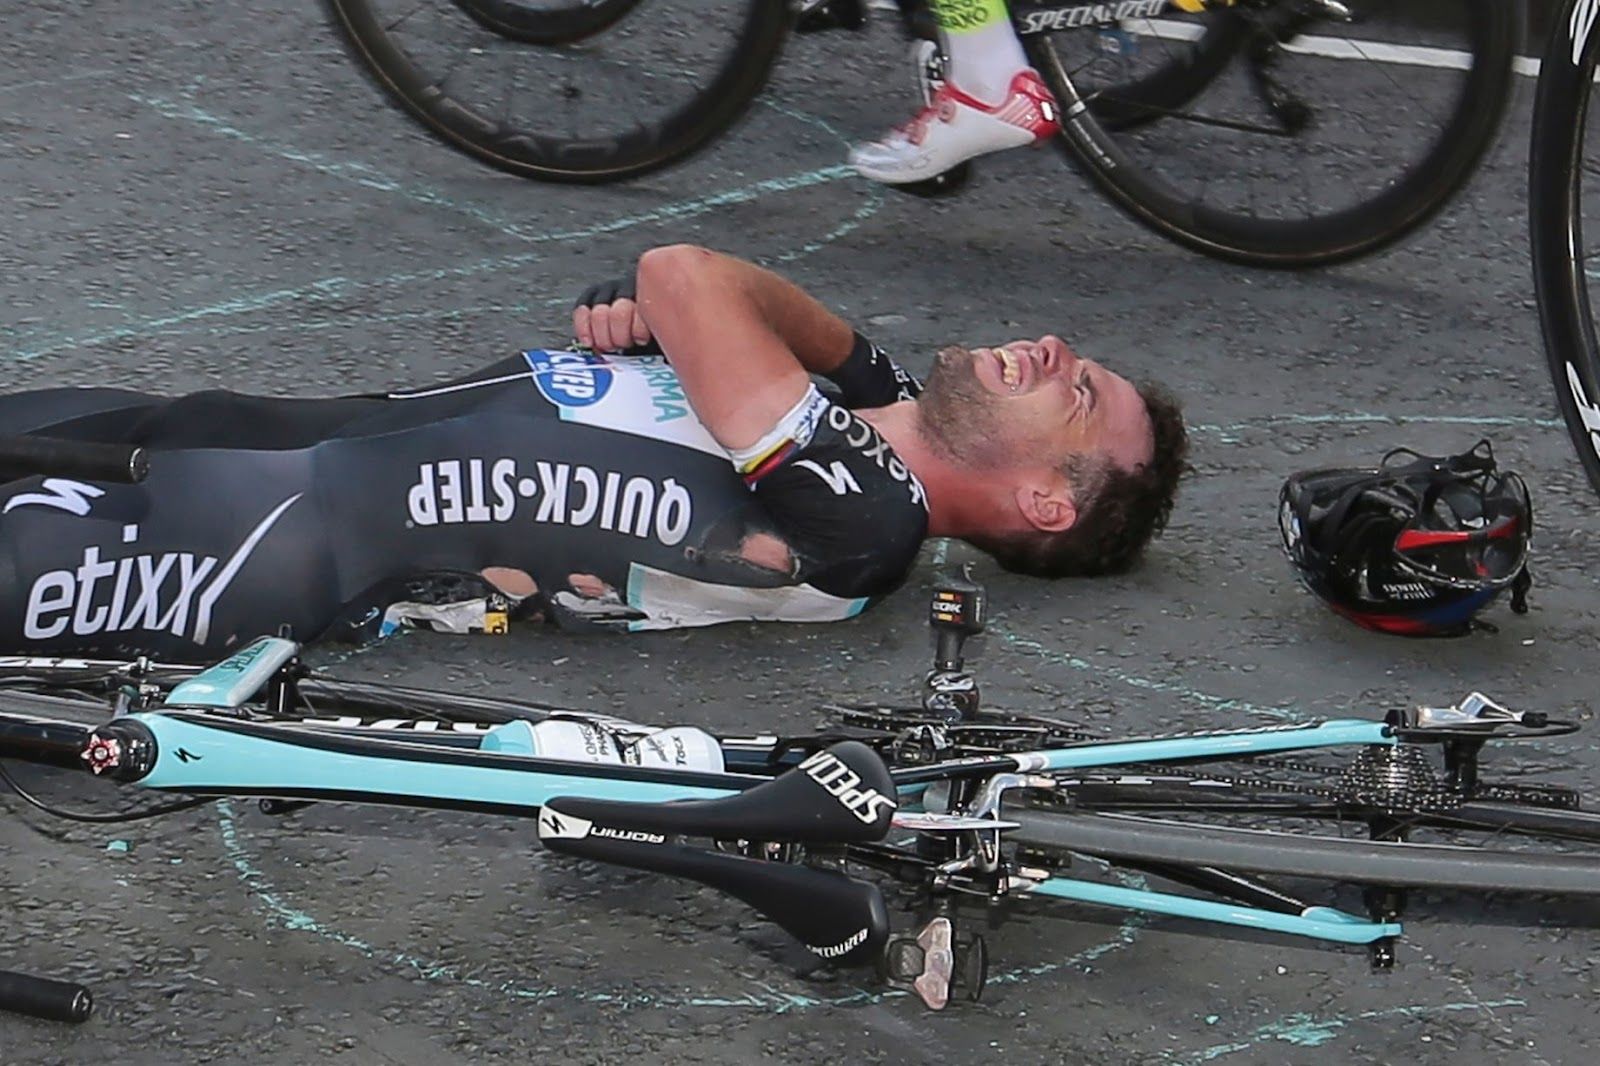 Cycling: Mark Cavendish suffers gruesome injury